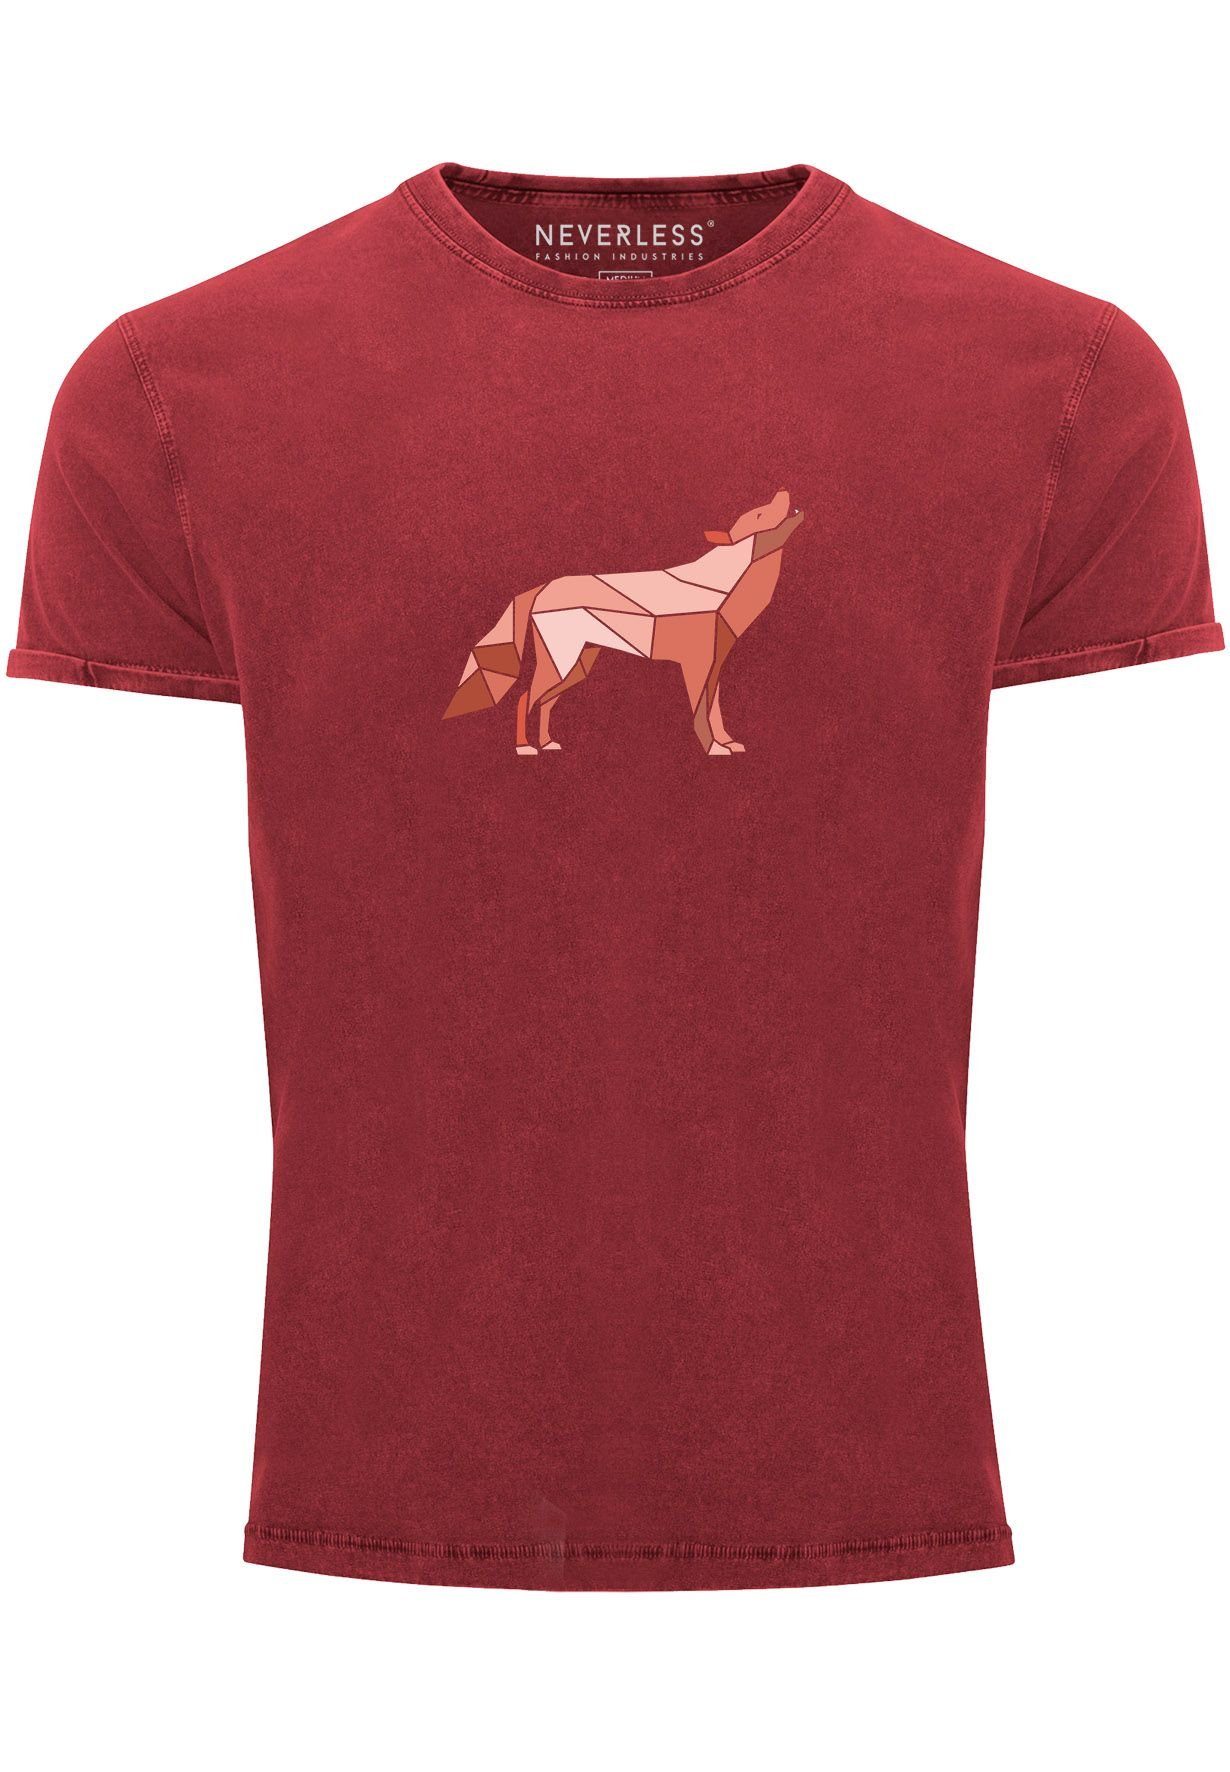 Neverless Print-Shirt Herren Vintage Shirt Aufdruck Wolf Polygon Print Geometrie Outdoor Wil mit Print rot